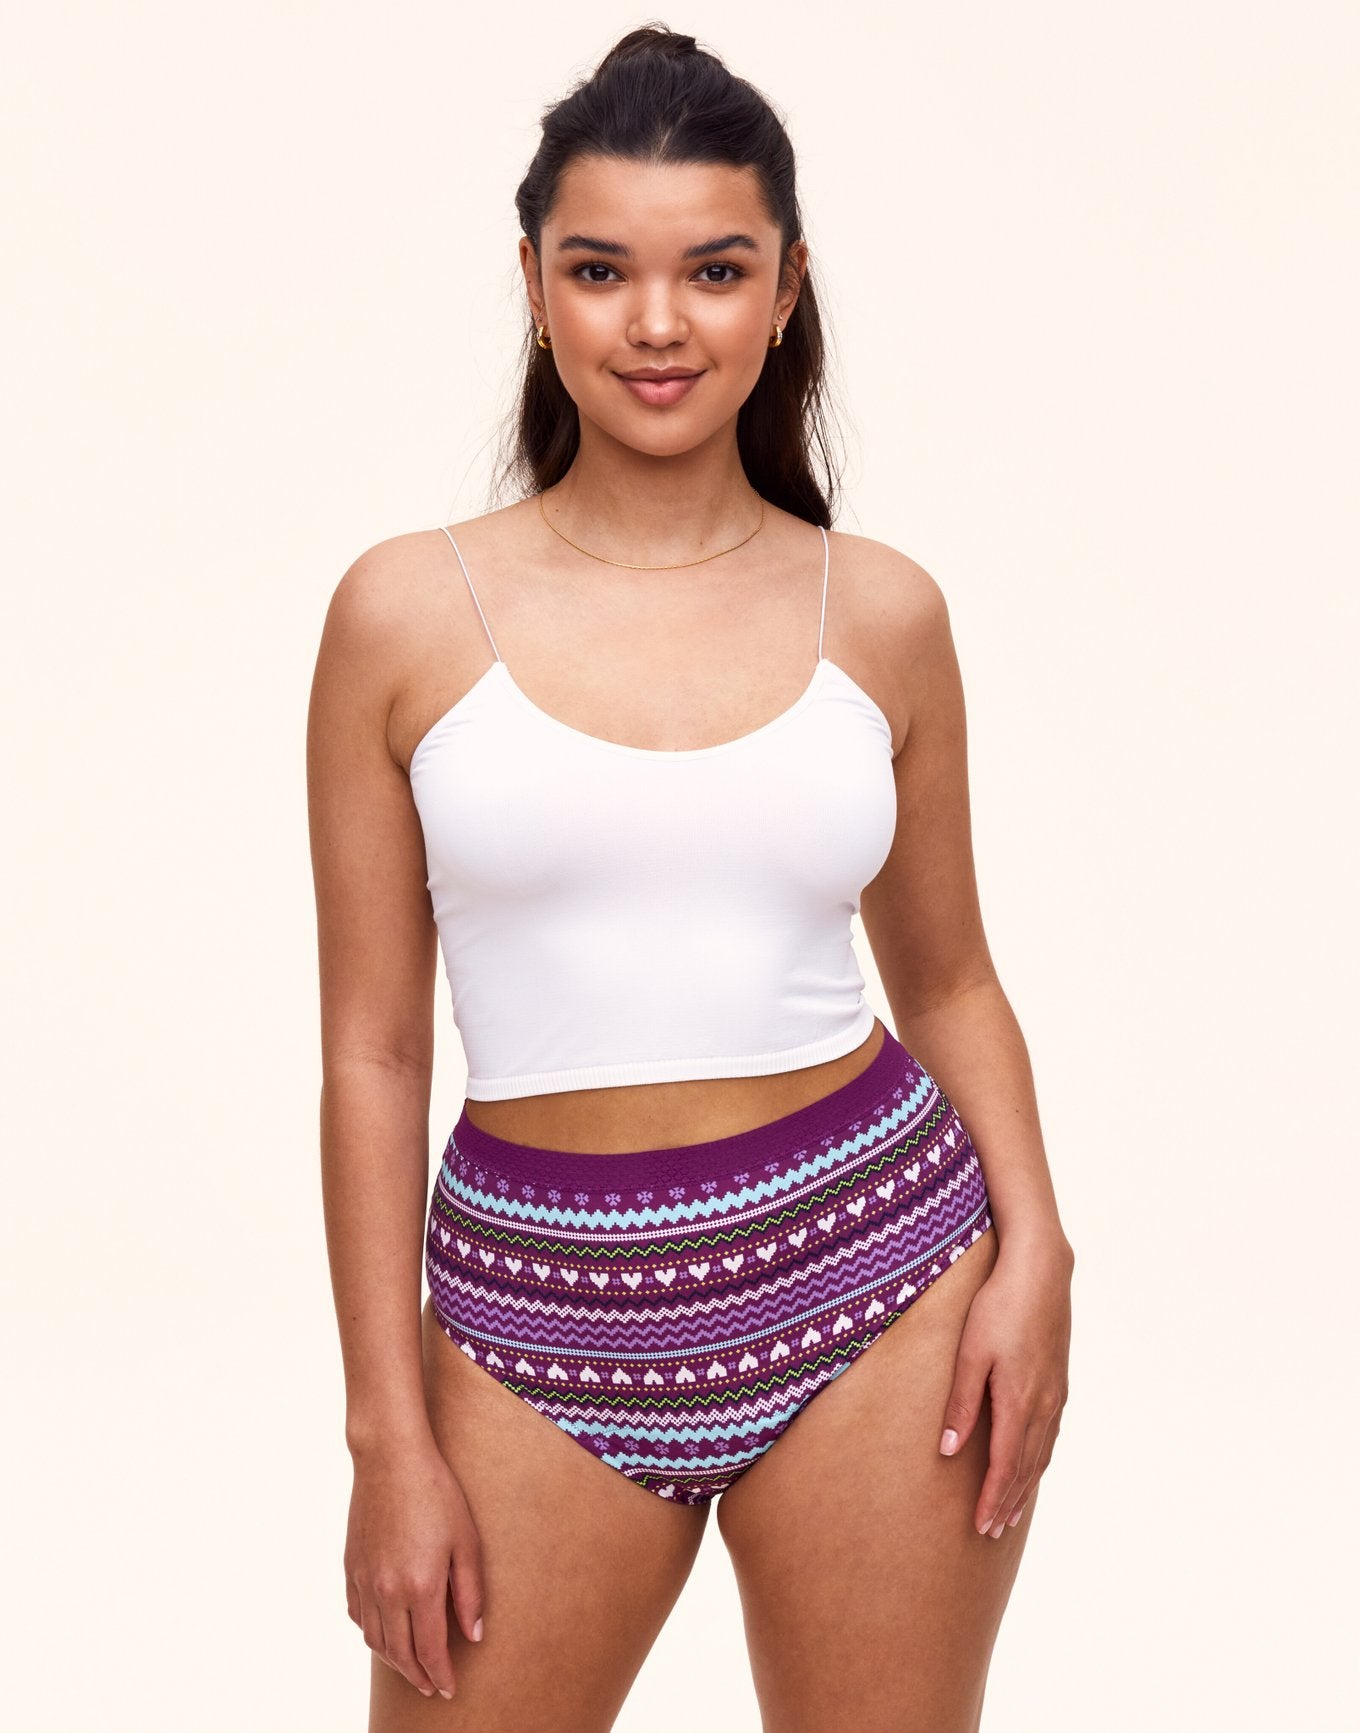 Joyja Jess period-proof panty in color Joyful Fair Isle C01 and shape high waisted